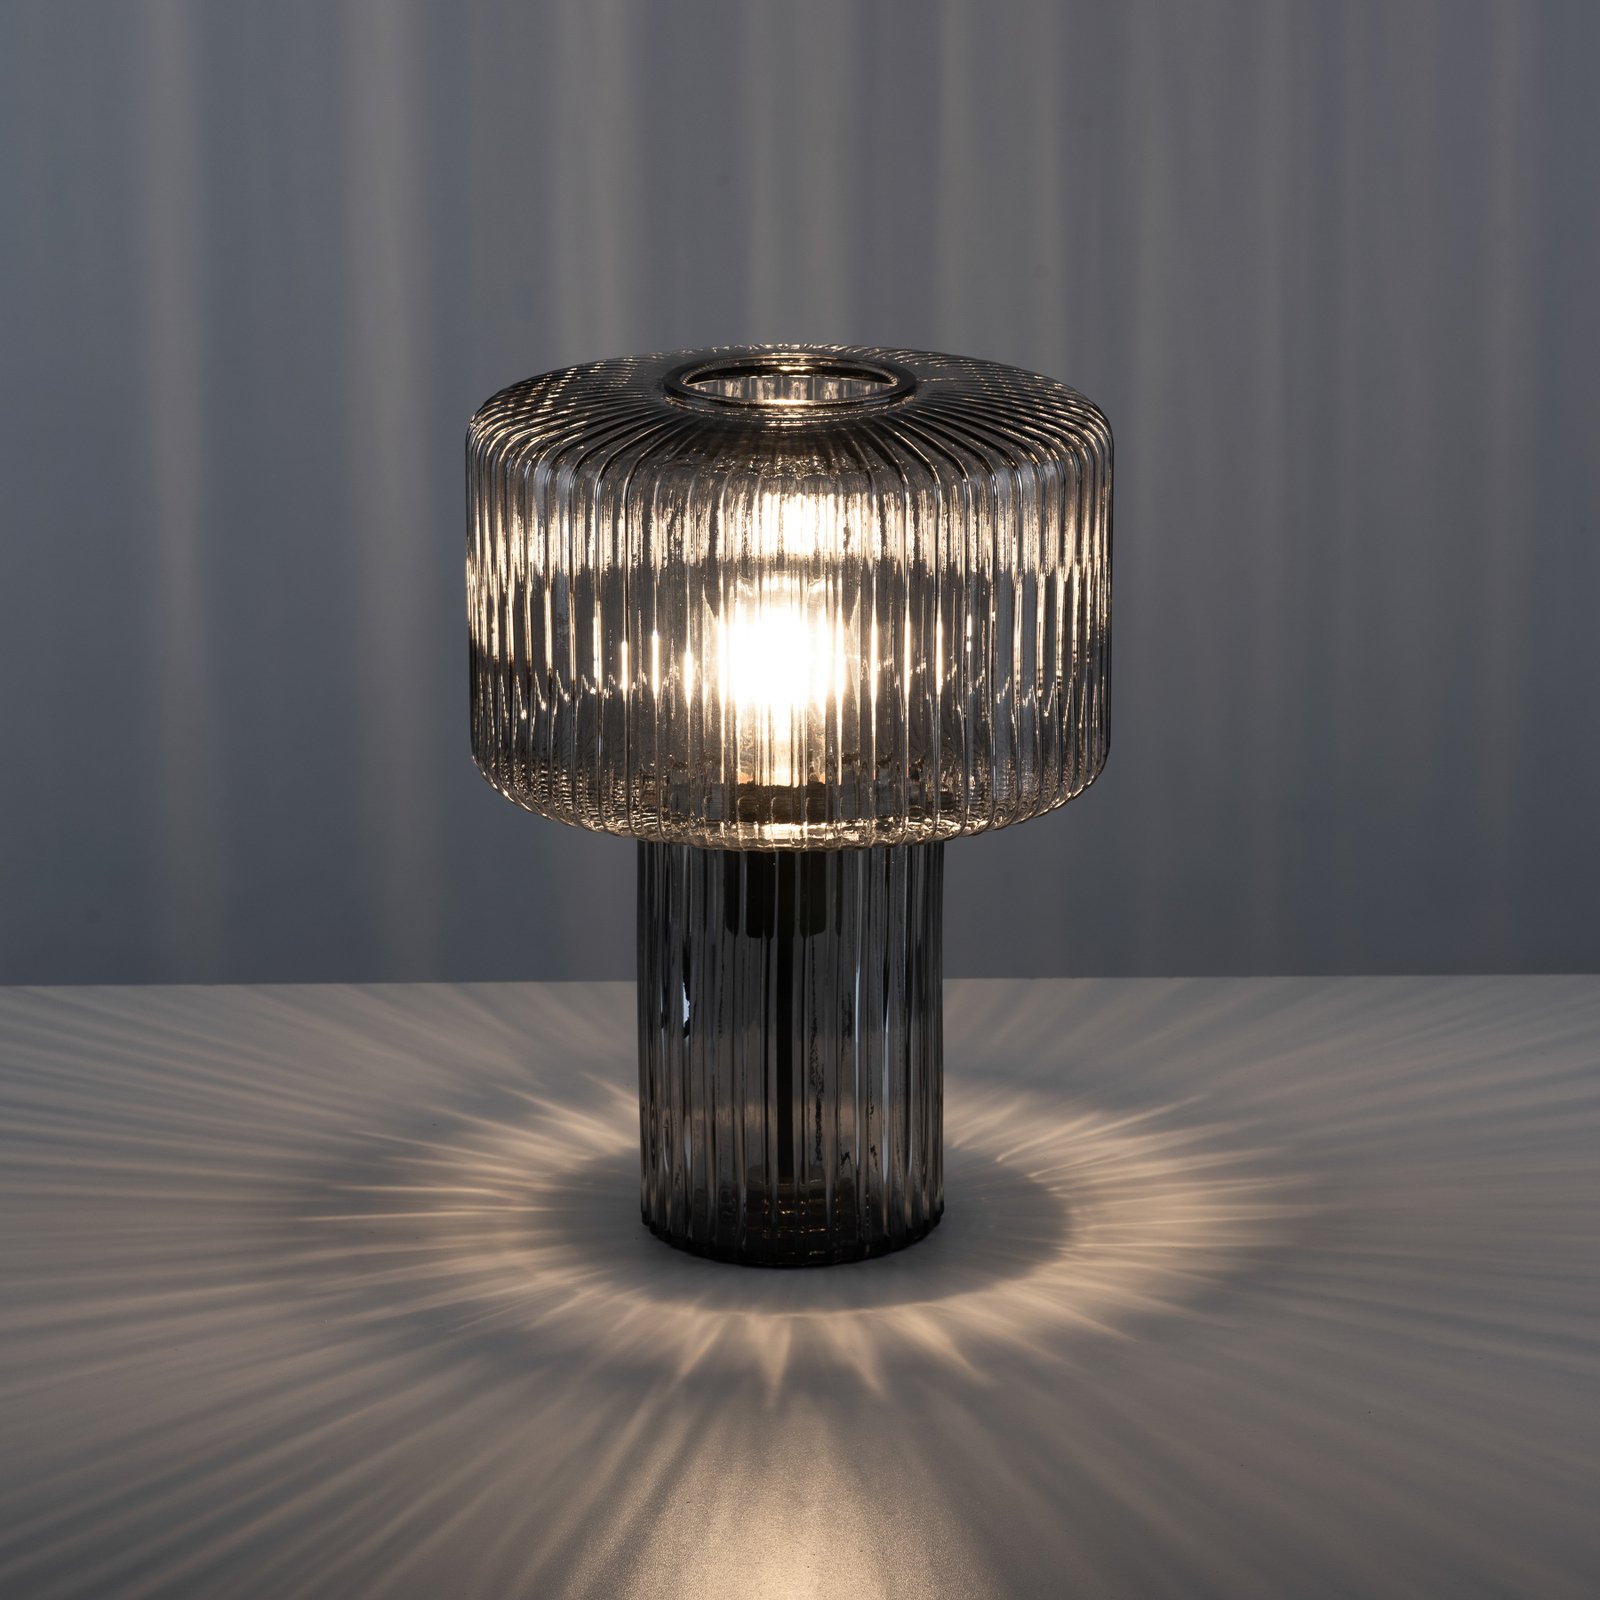 Fungus table lamp made of glass, smoke-coloured